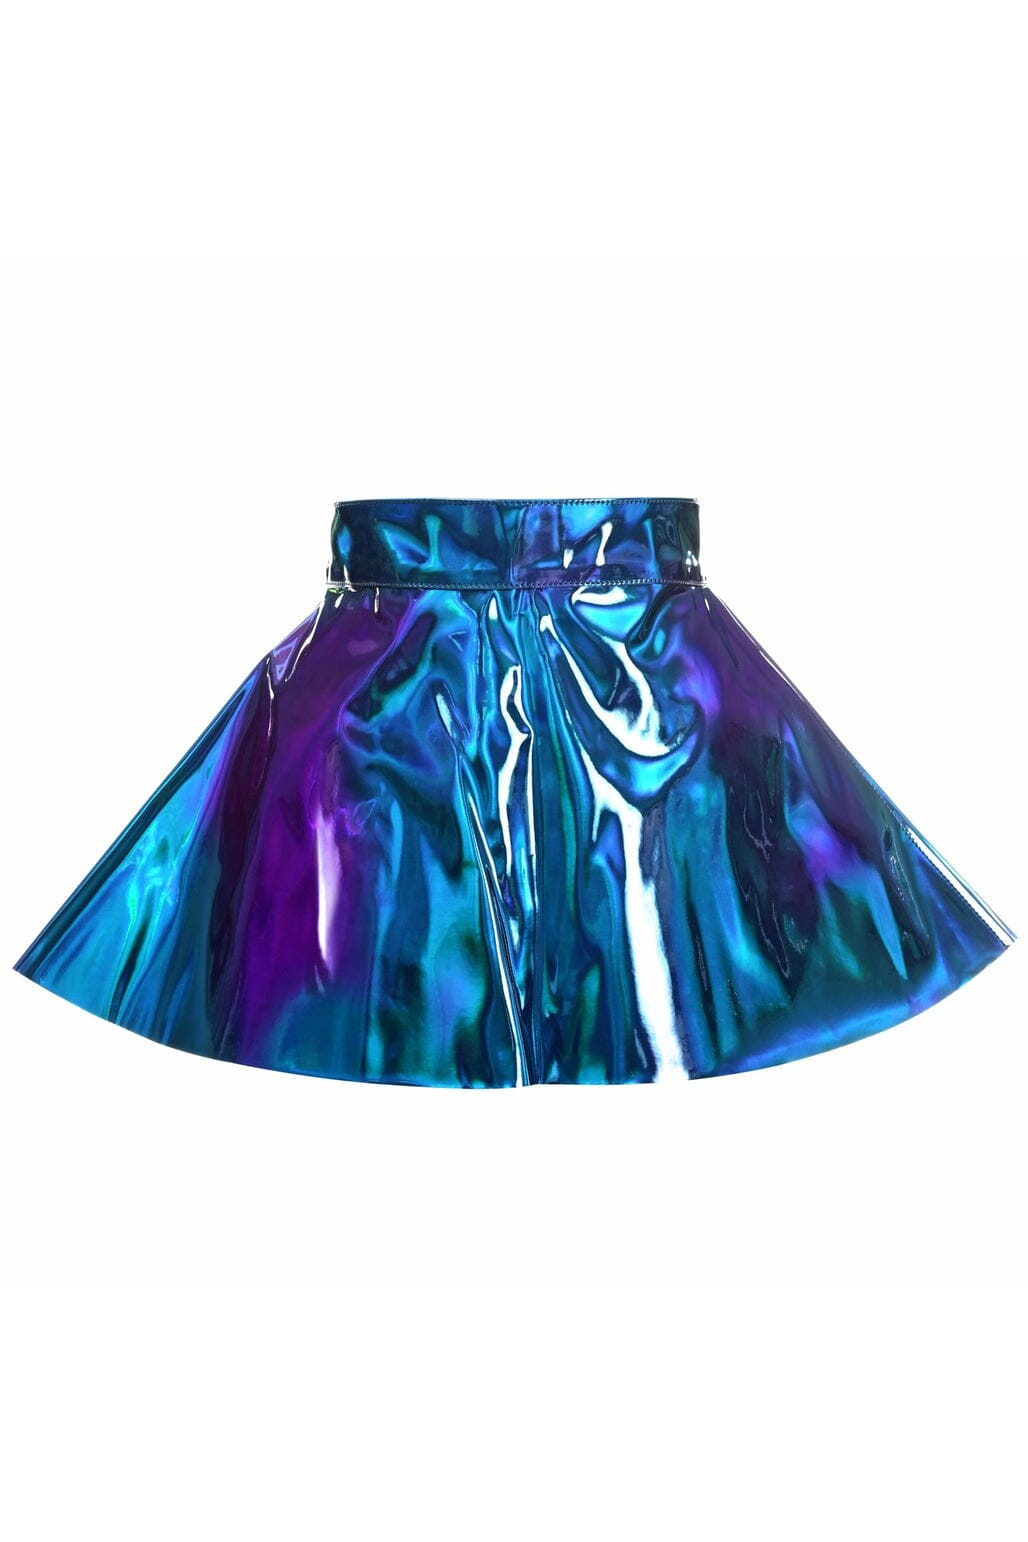 Blue/Teal Holo Skater Skirt-Mini Skirts-Daisy Corsets-Hologram-S-SEXYSHOES.COM